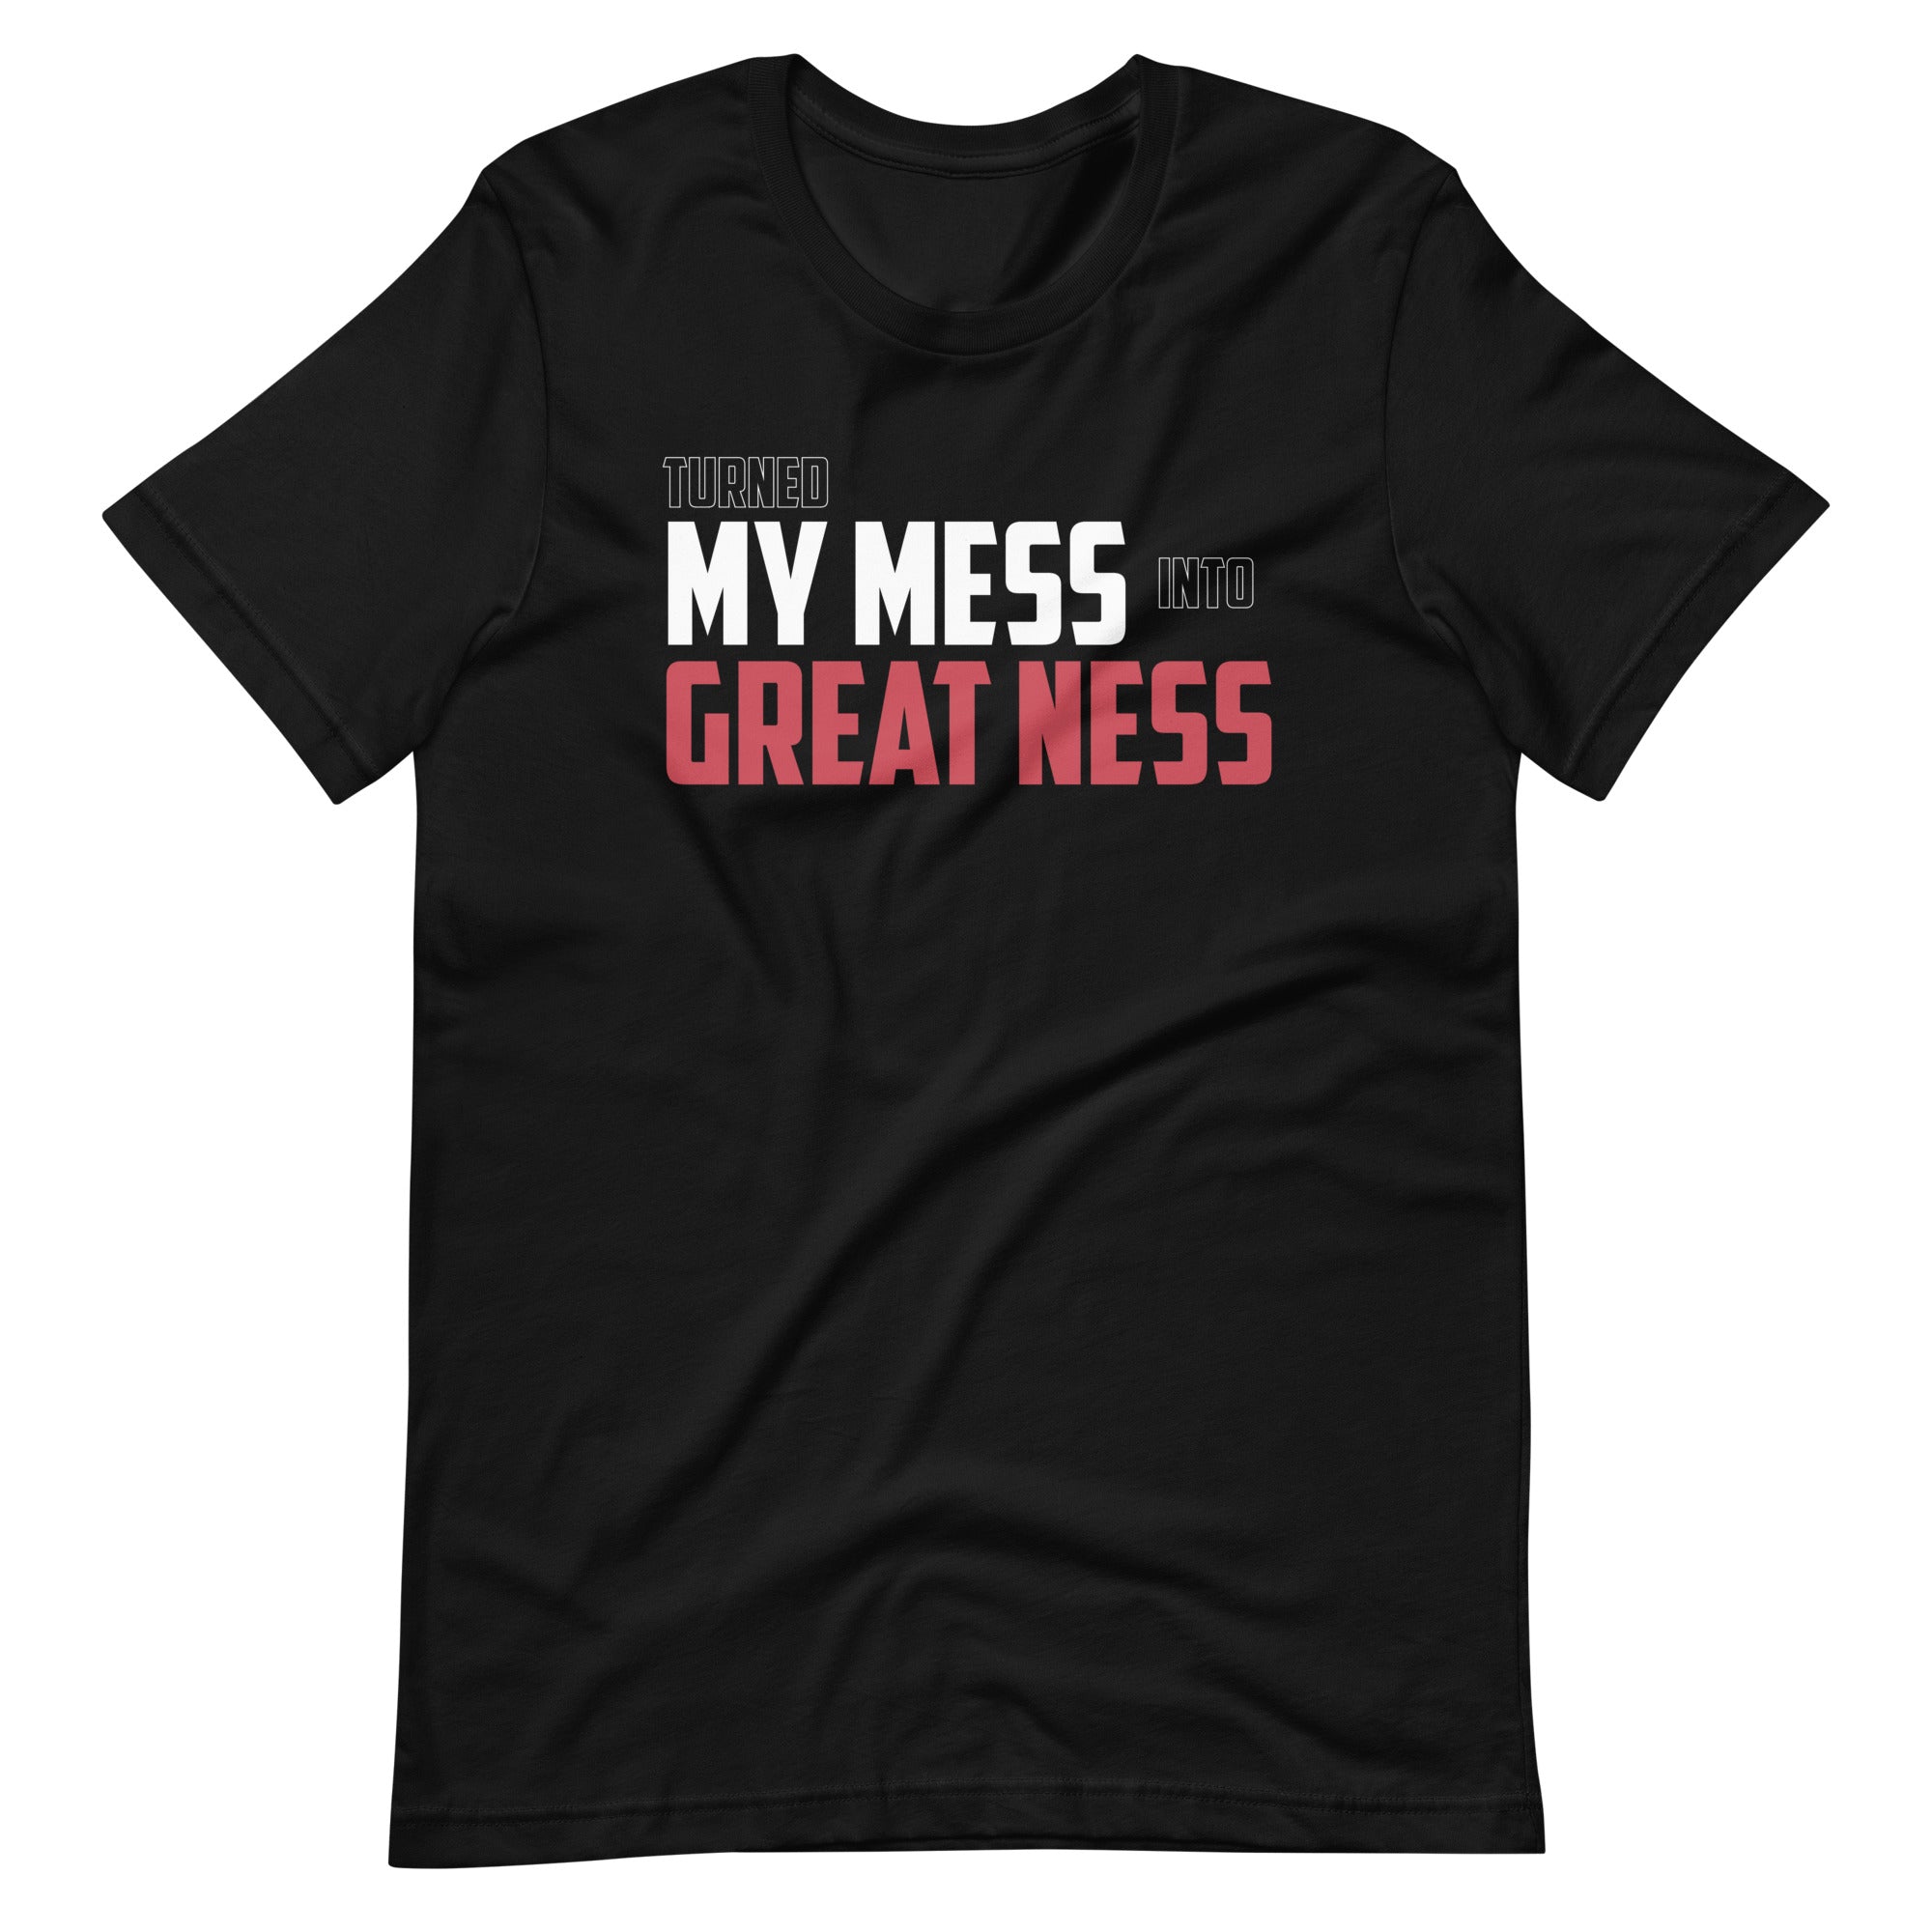 Mike Sorrentino Greatness Shirt